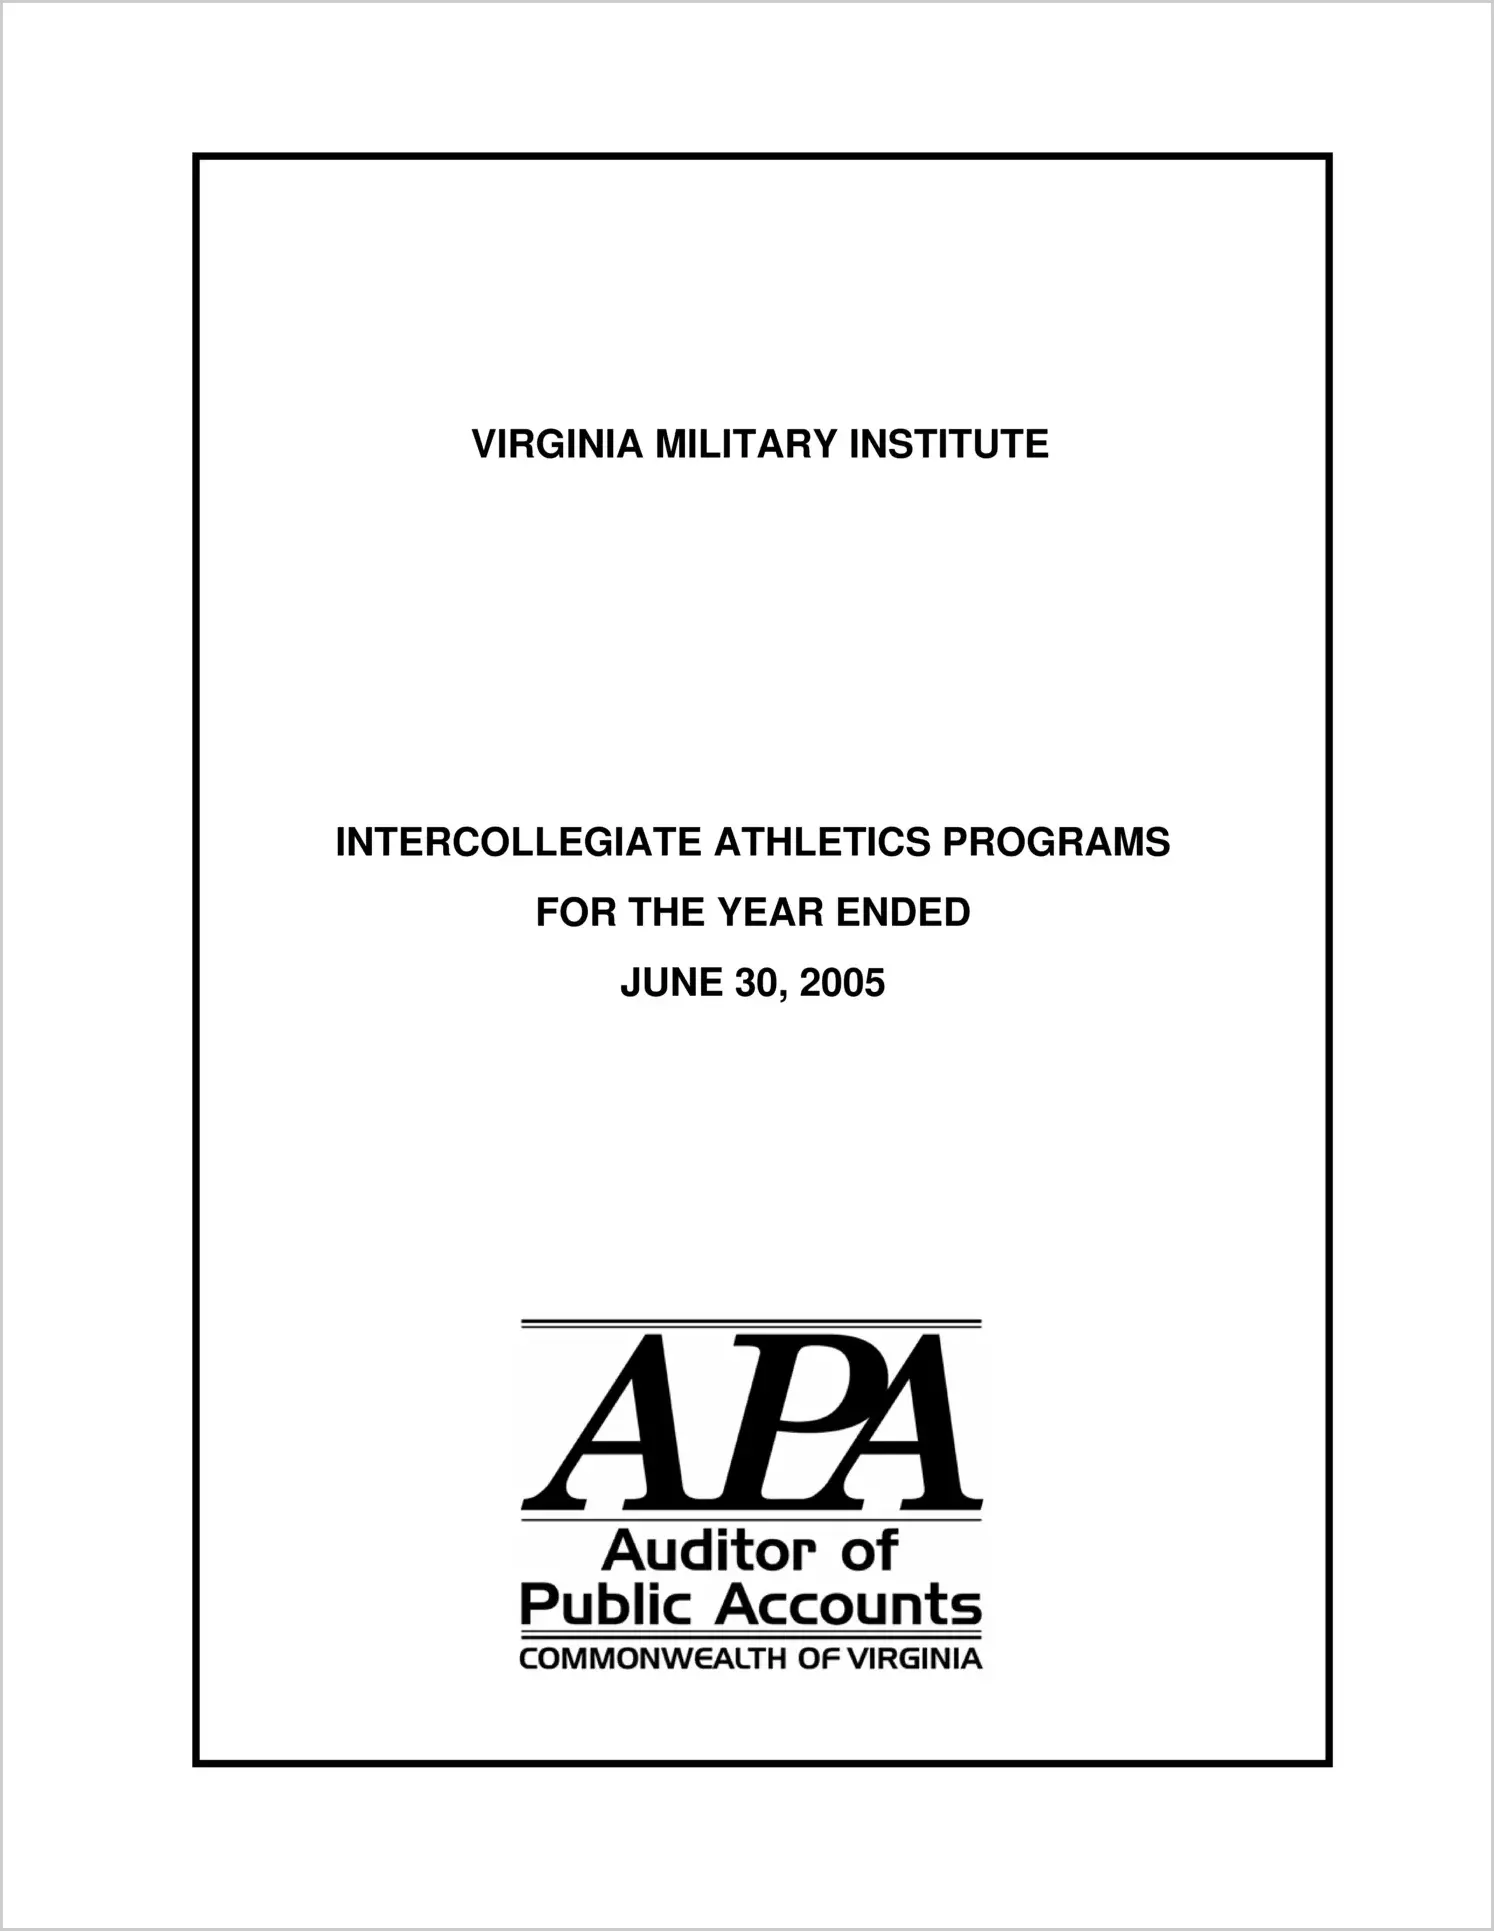 Virginia Military Institute Intercollegiate Athletics Programs for the year ended June 30, 2005